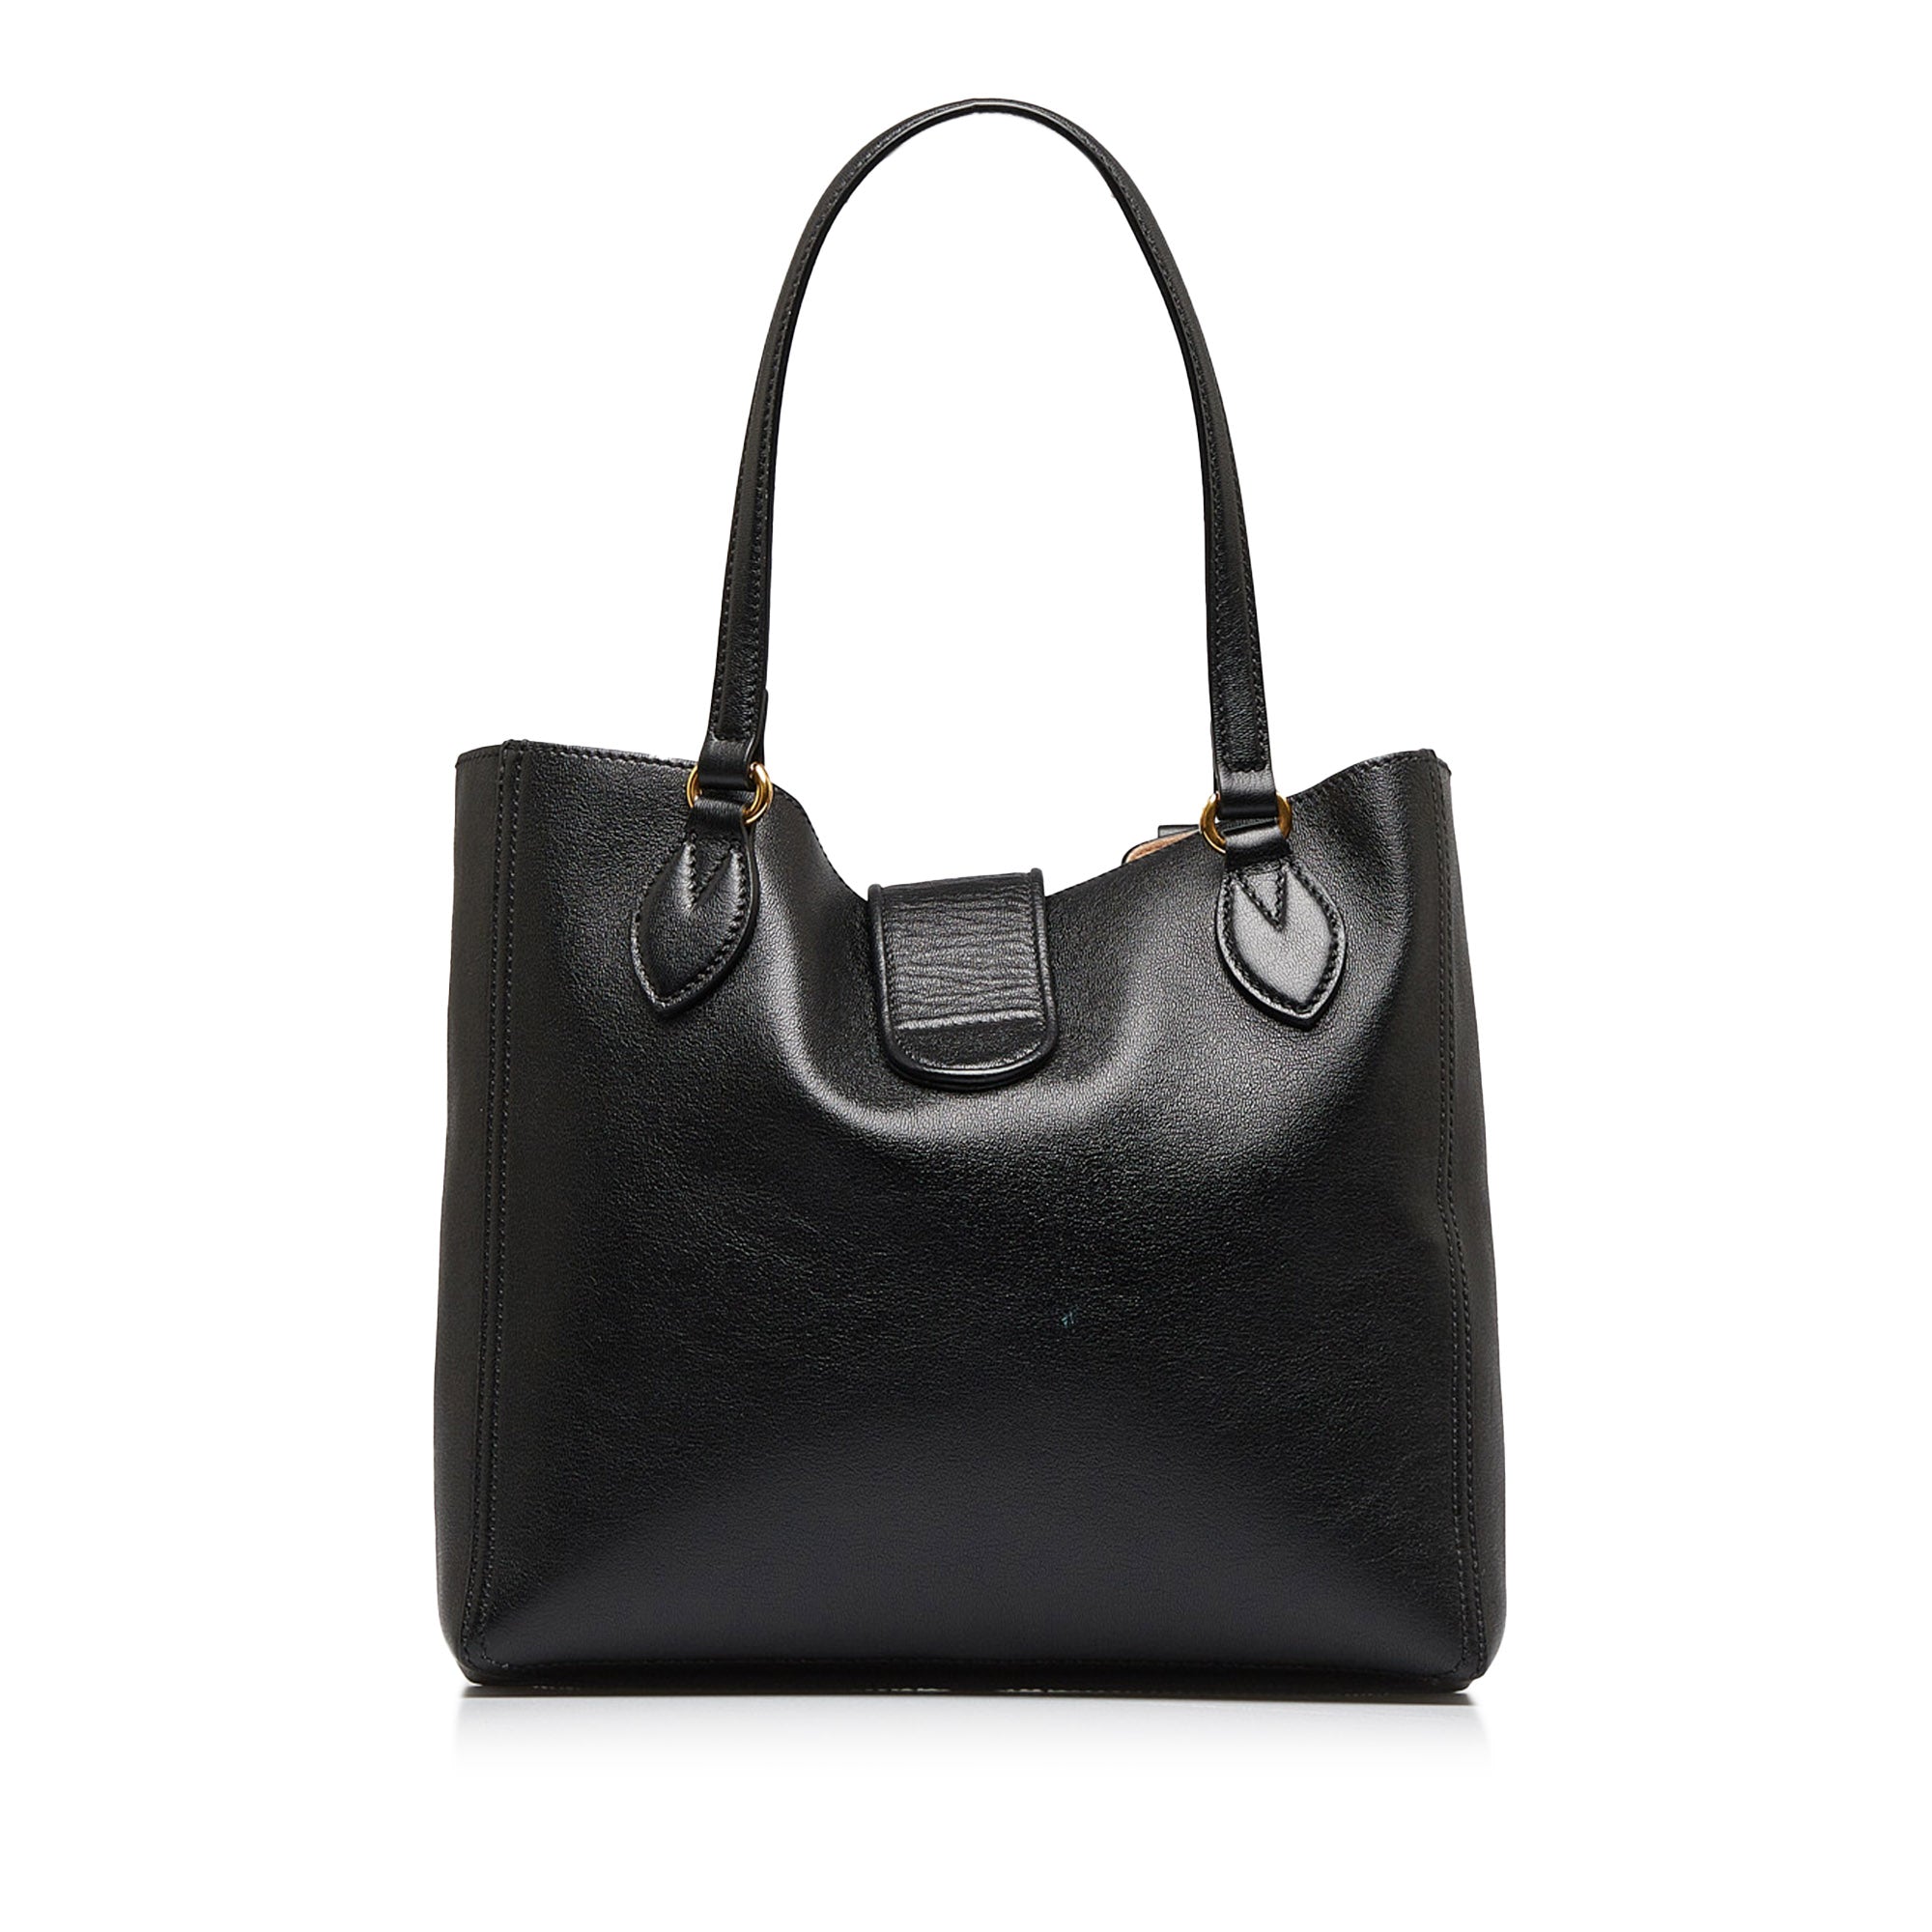 Longchamp - Authenticated Handbag - Leather Black Plain for Women, Good Condition